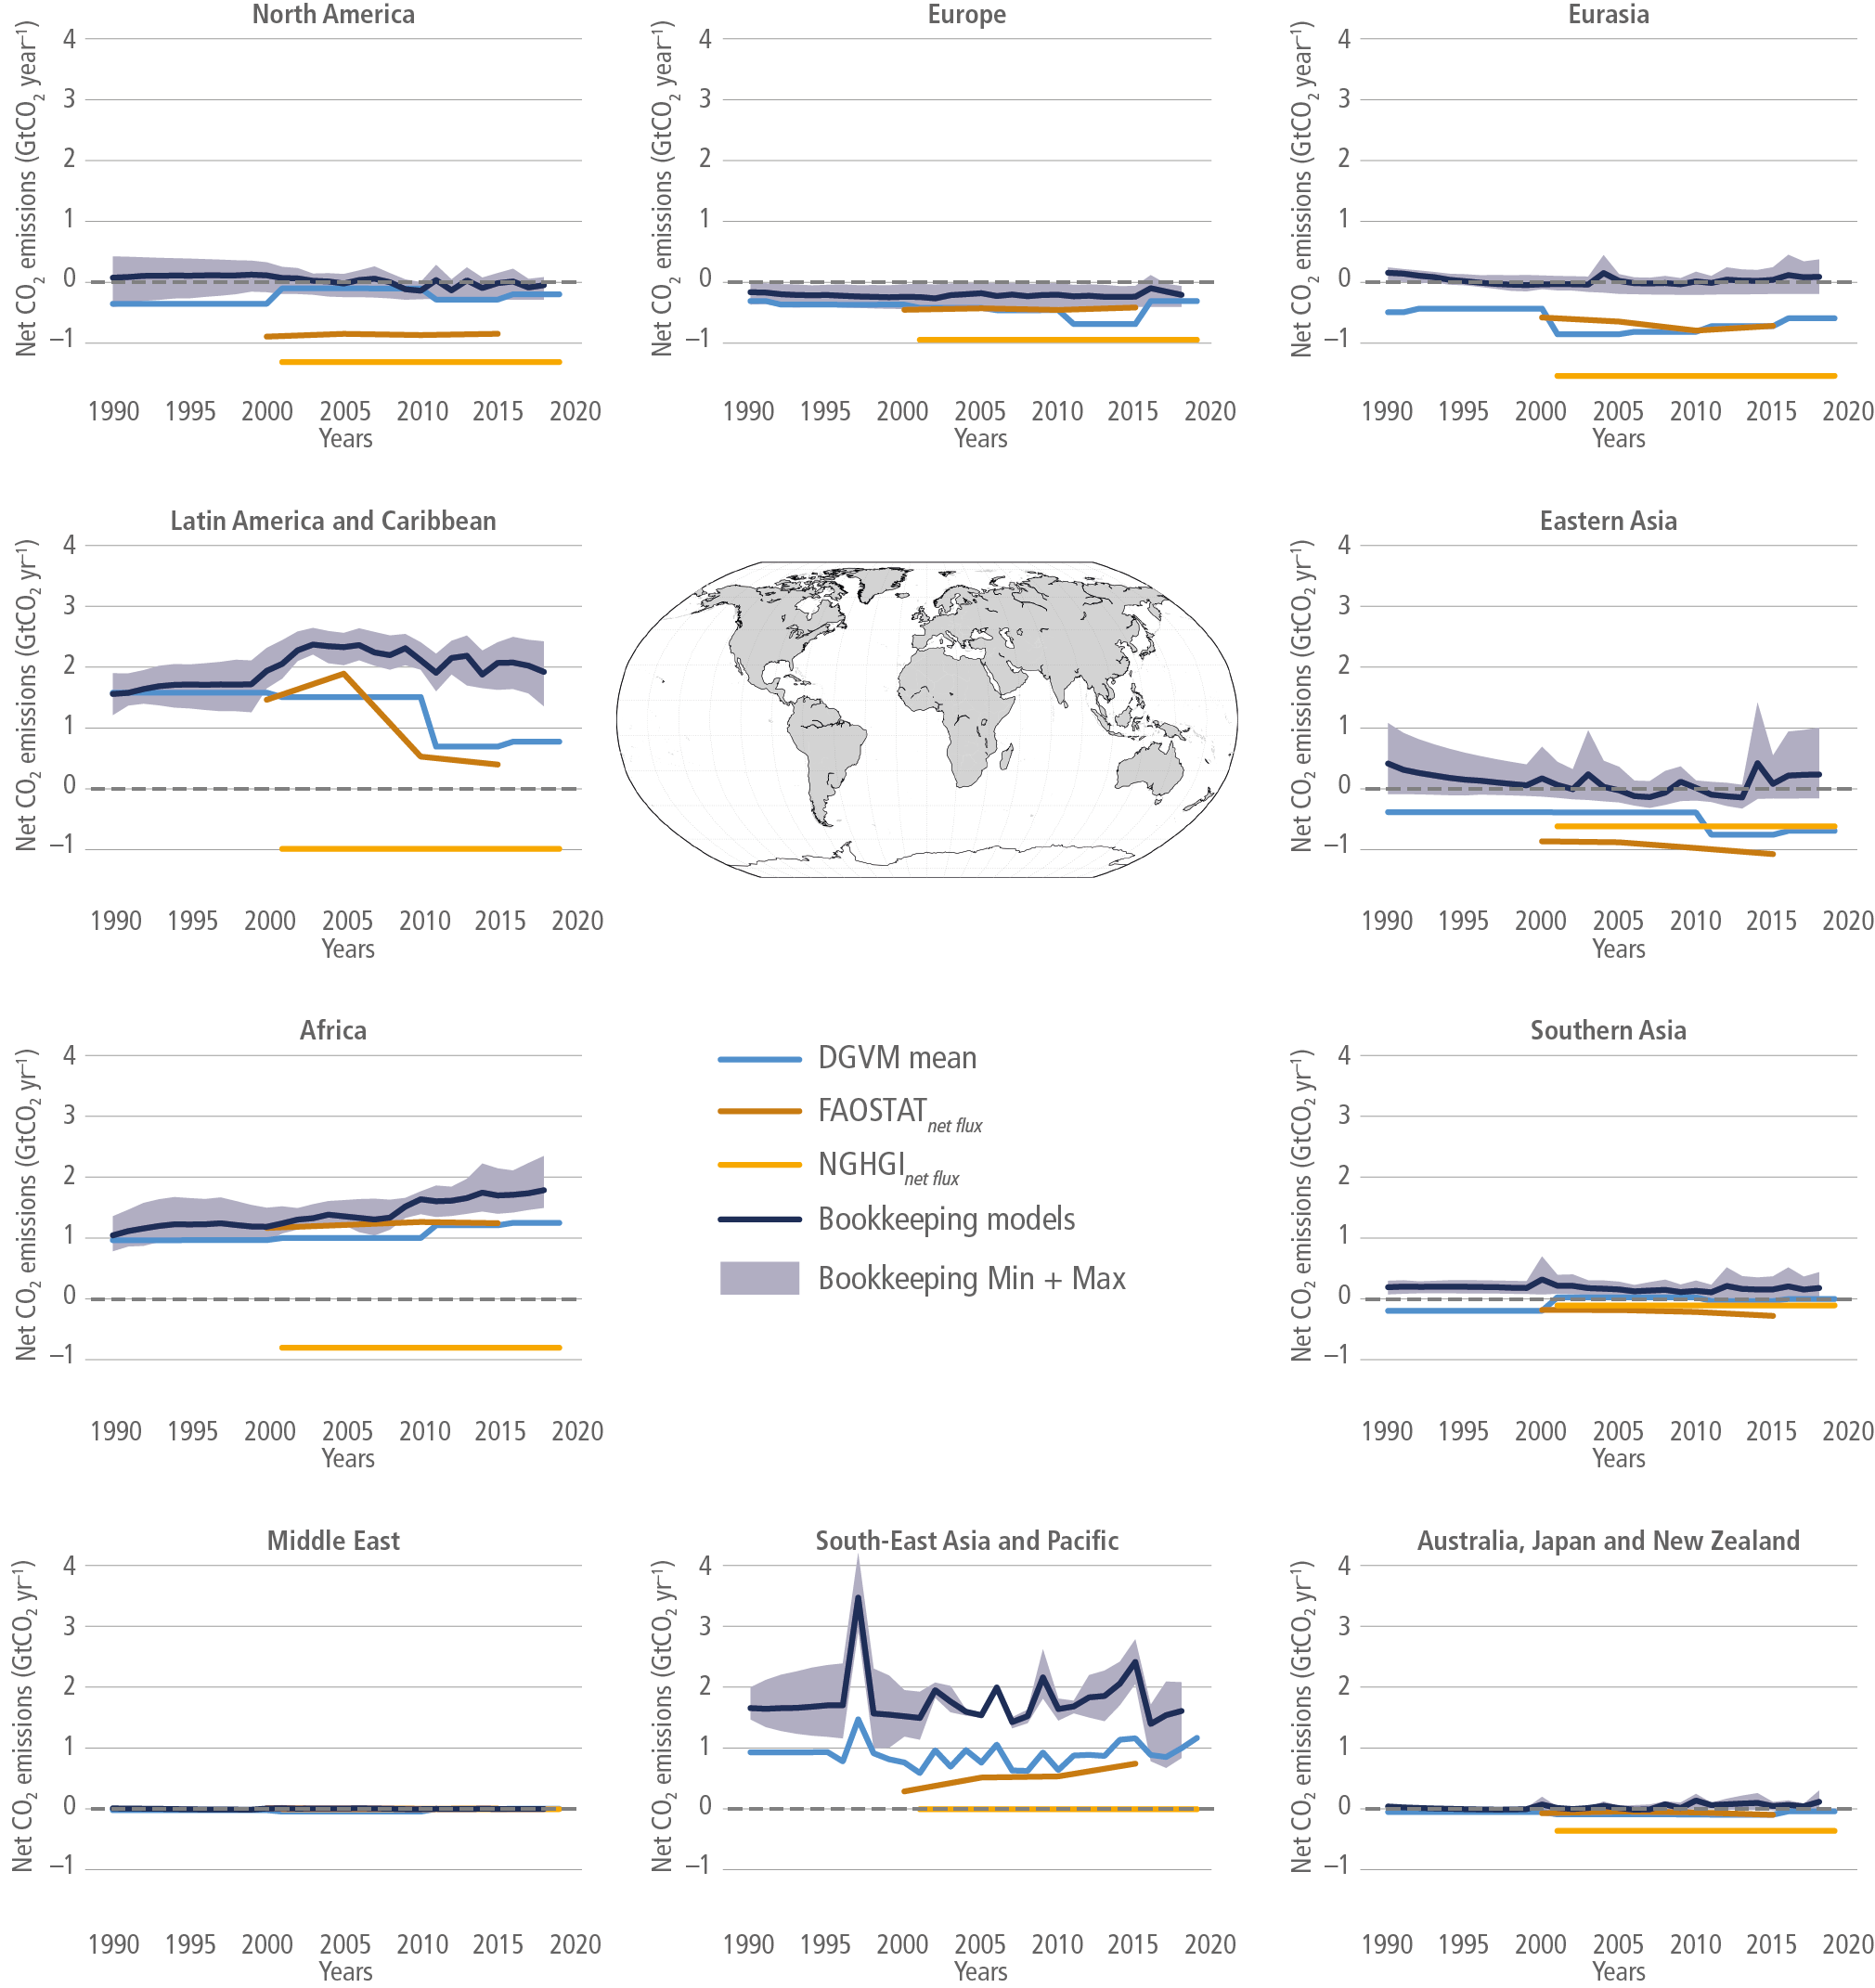 https://ipcc.ch/report/ar6/wg3/downloads/figures/IPCC_AR6_WGIII_Figure_7_5.png